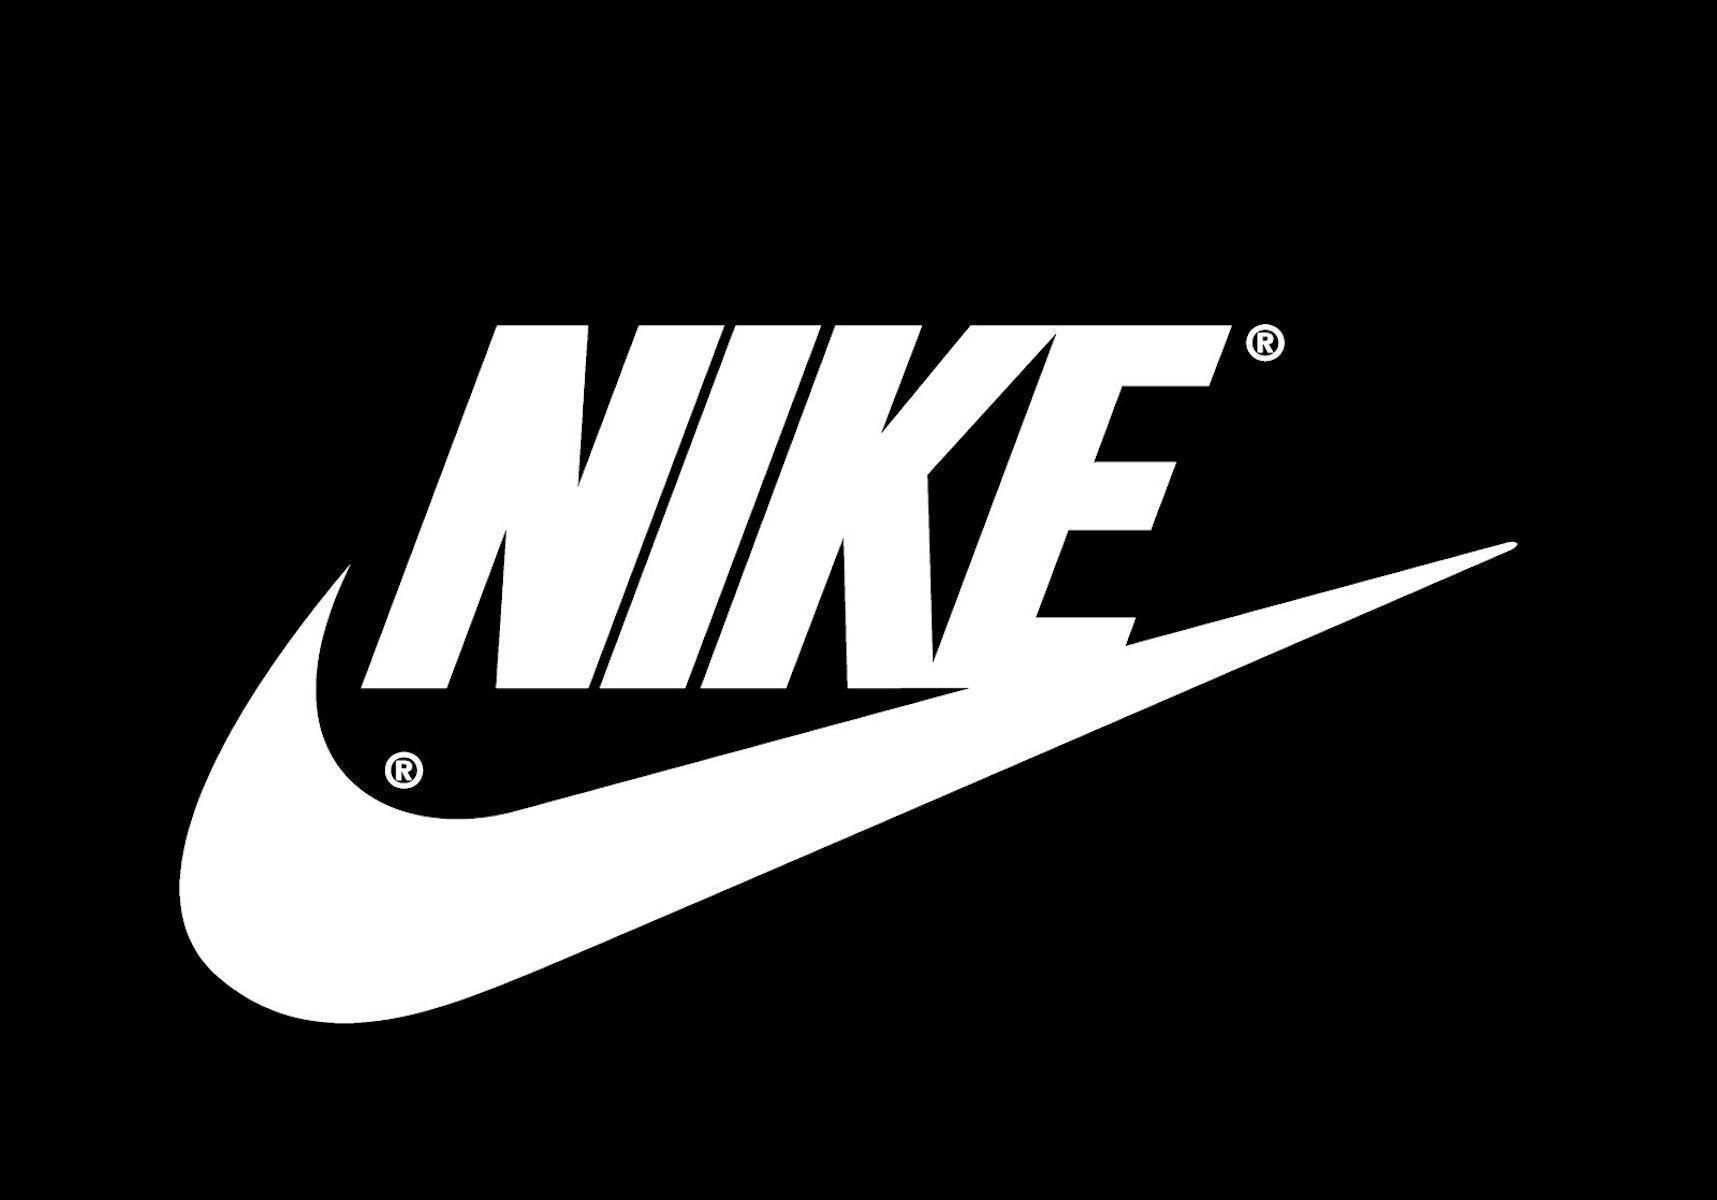 Nike Wallpaper Logo